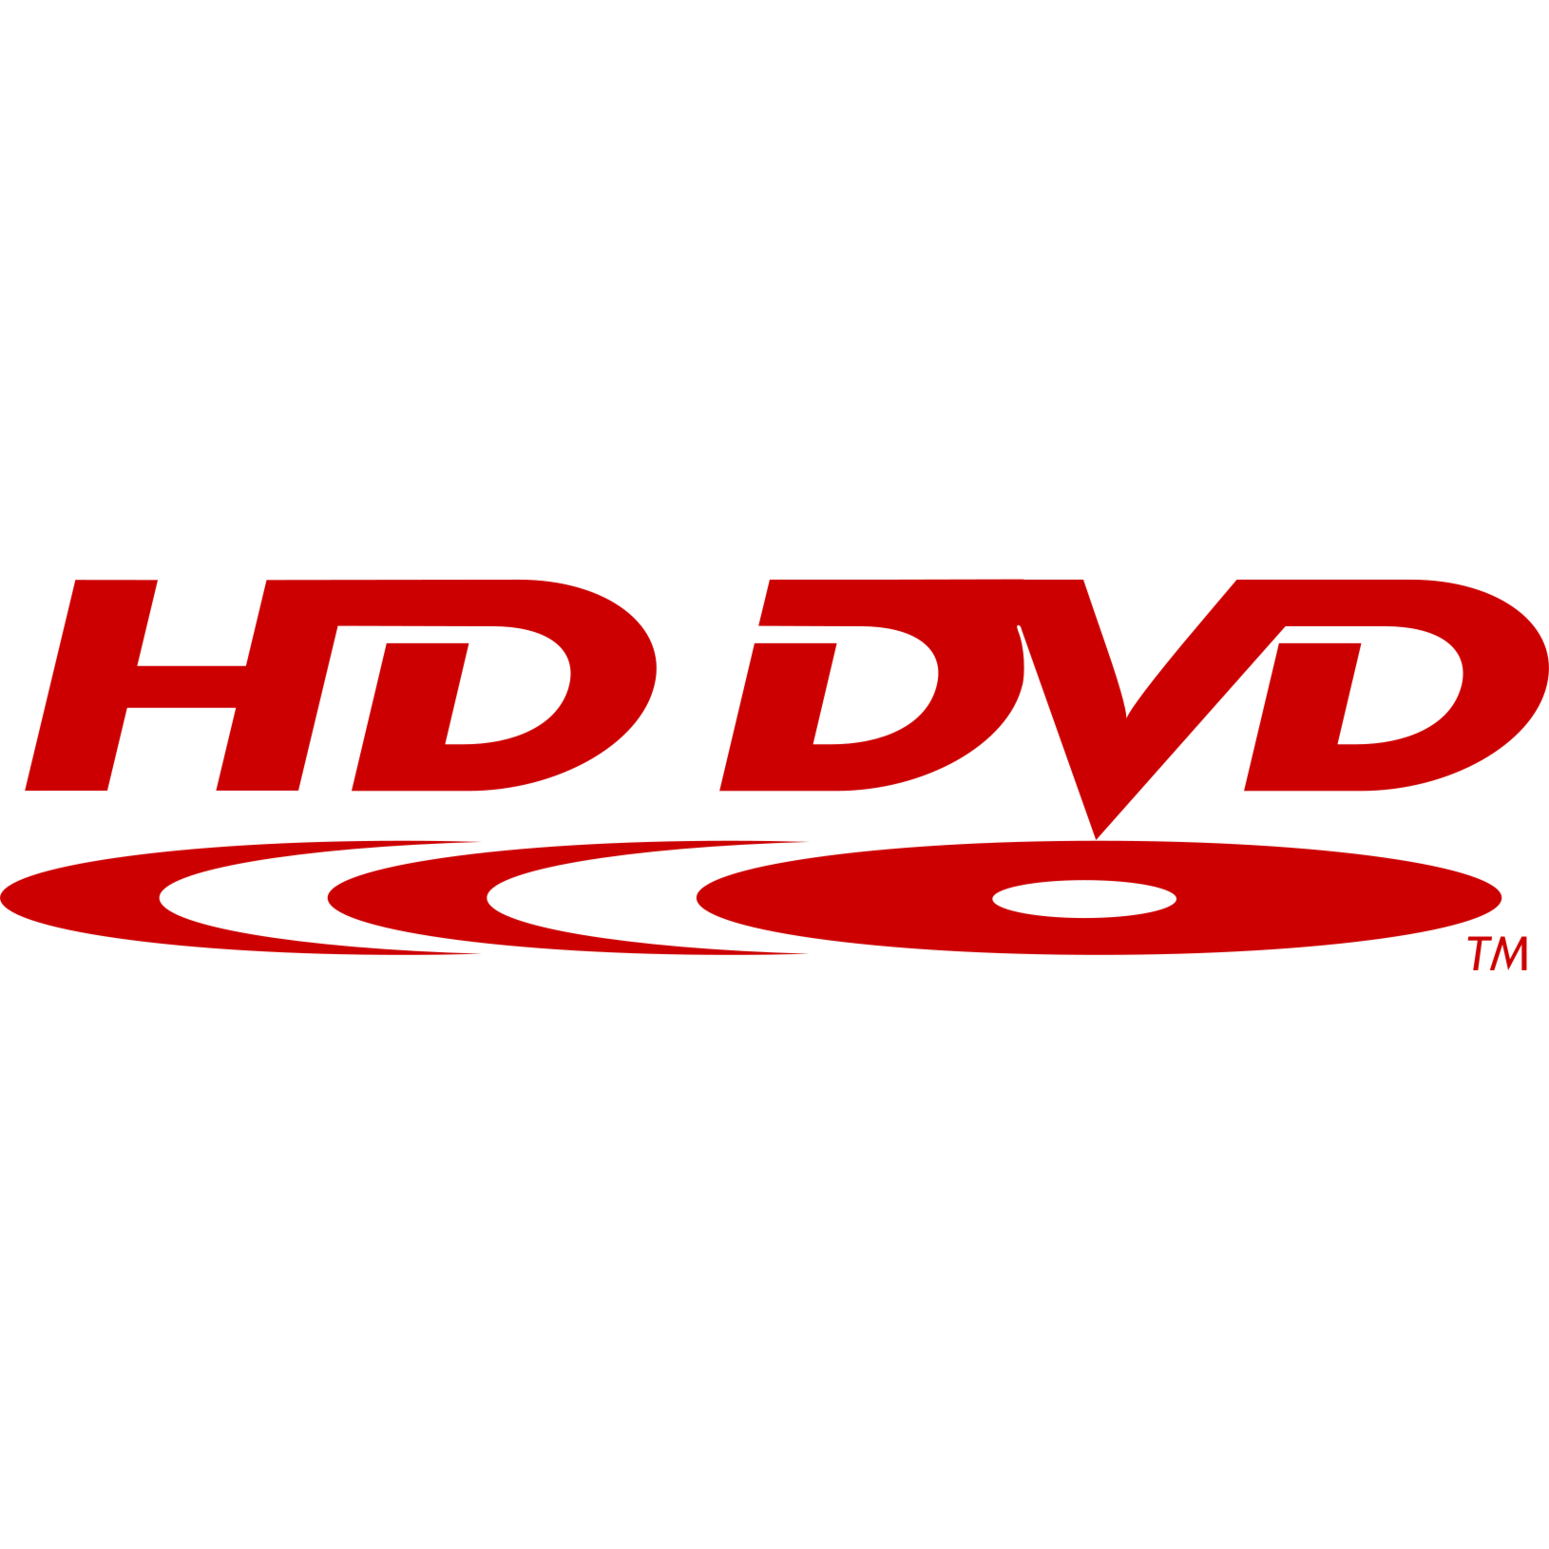 free dvd logo clip art - photo #22